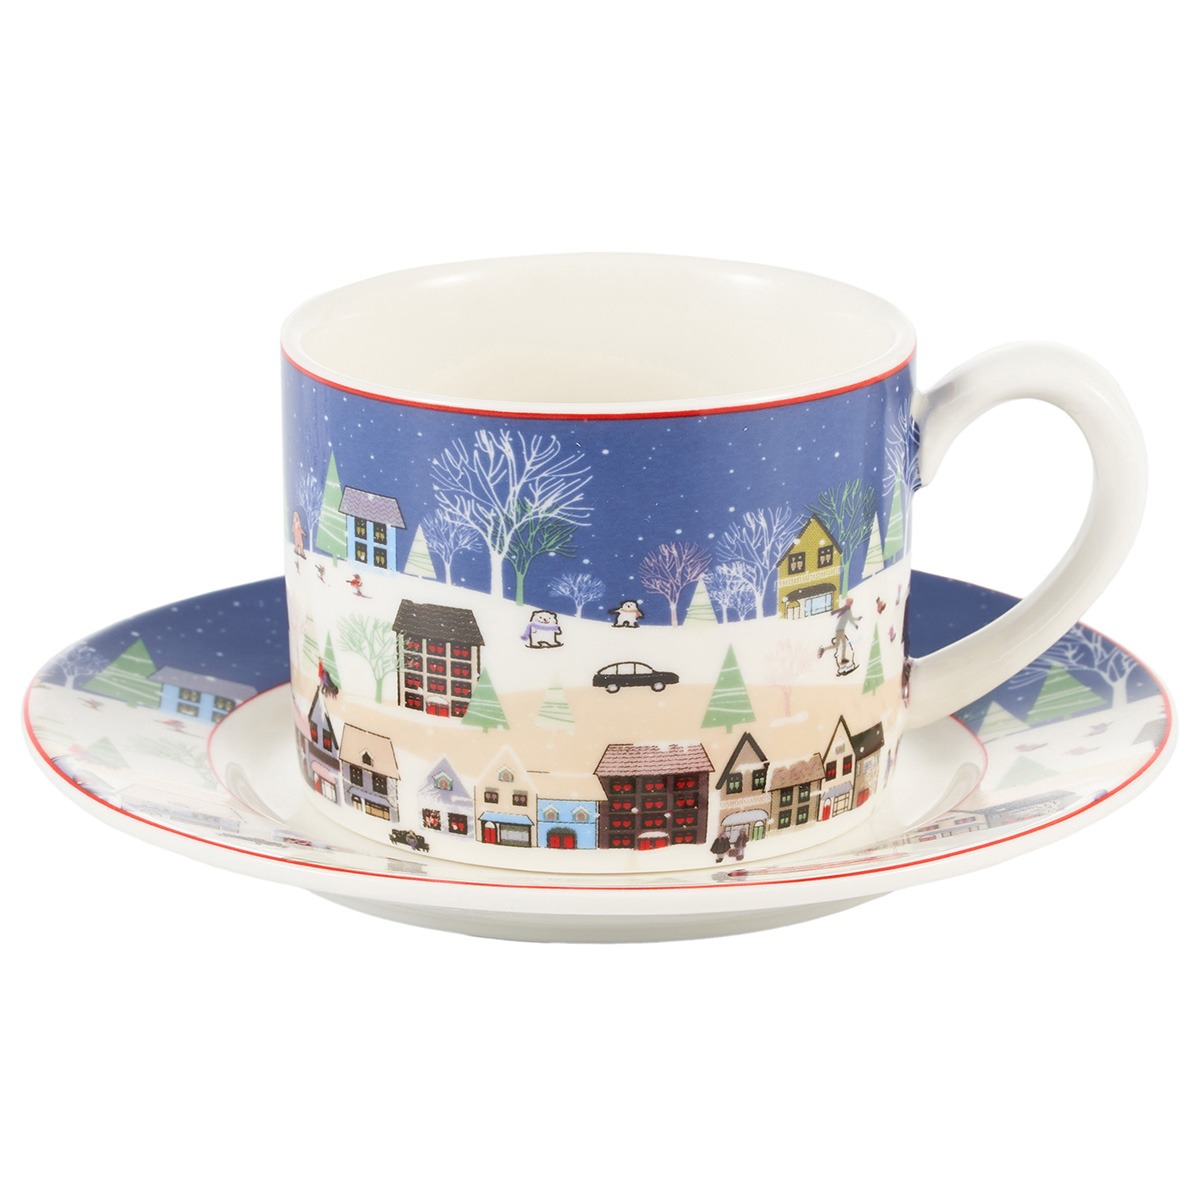 Чайная пара Gipfel Christmas фарфор синий чашка 250 мл, блюдце 14 см пара чайная чашка блюдце 350 мл tudor tu9999 4